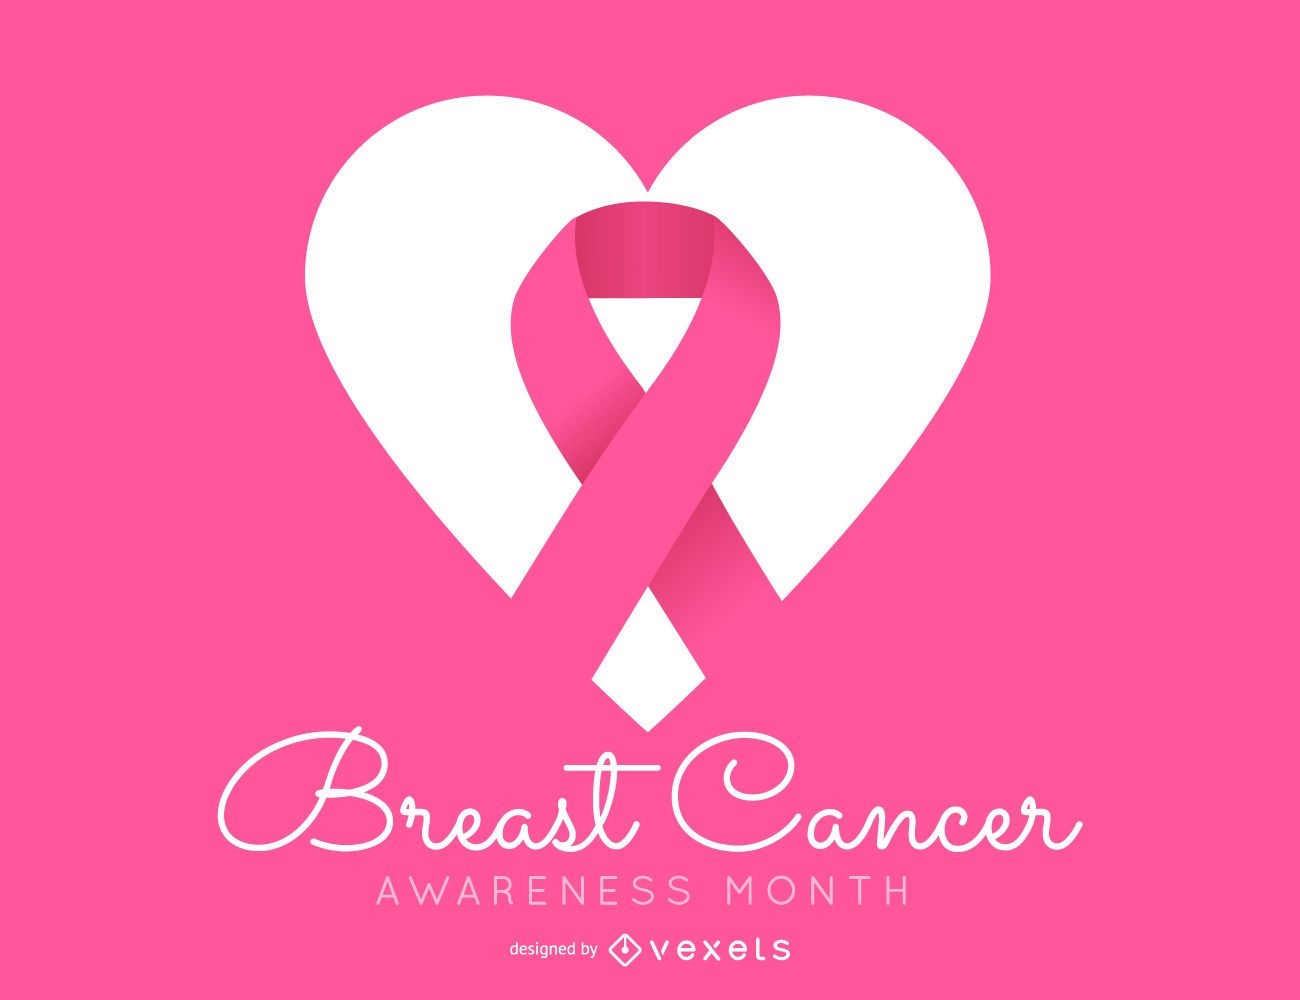 Simple pink Breast Cancer Awareness design